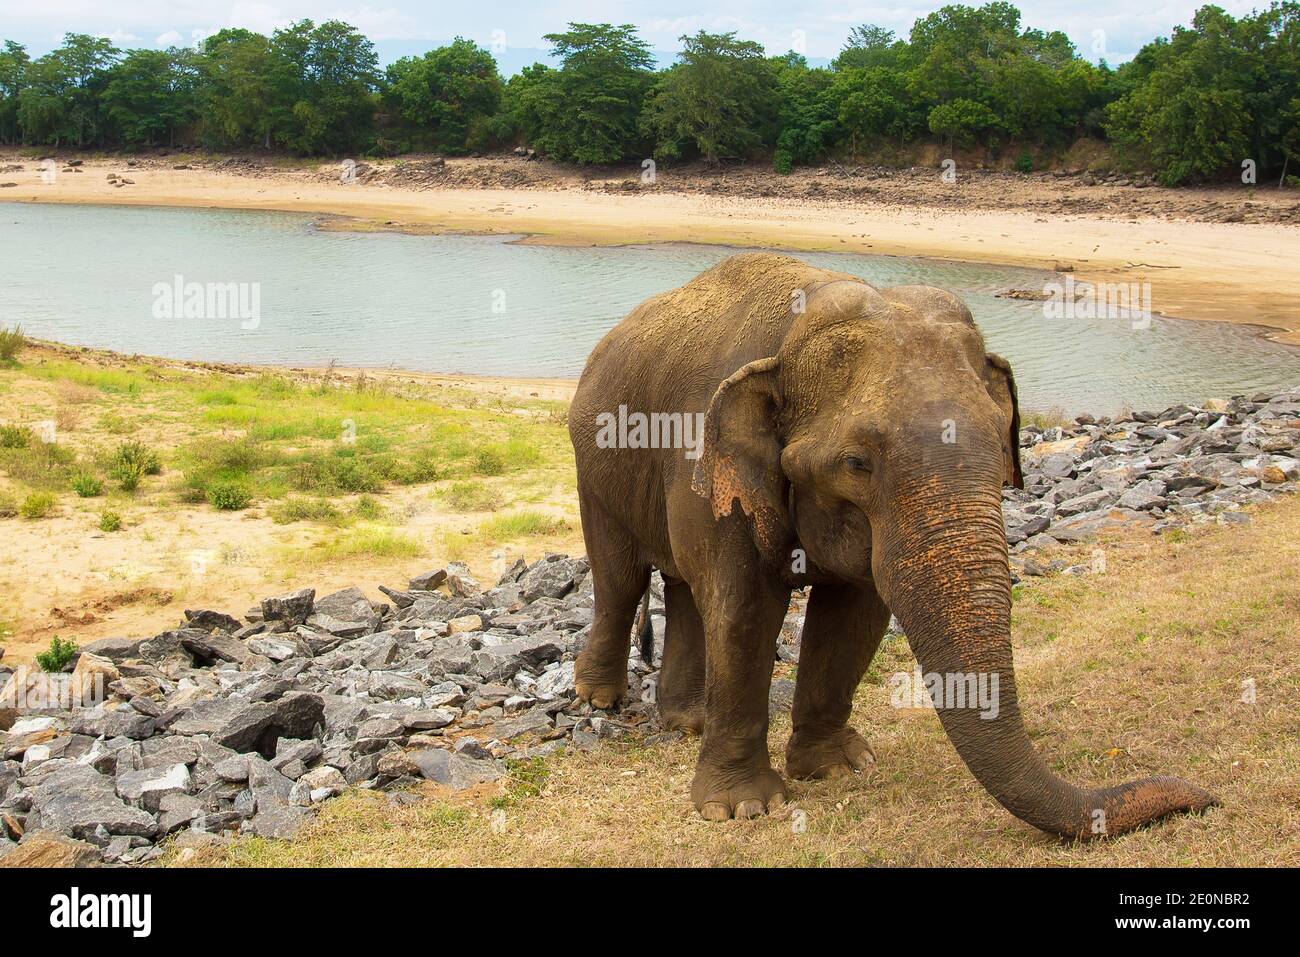 An elephant walking in the grasslands of Sri Lanka Stock Photo